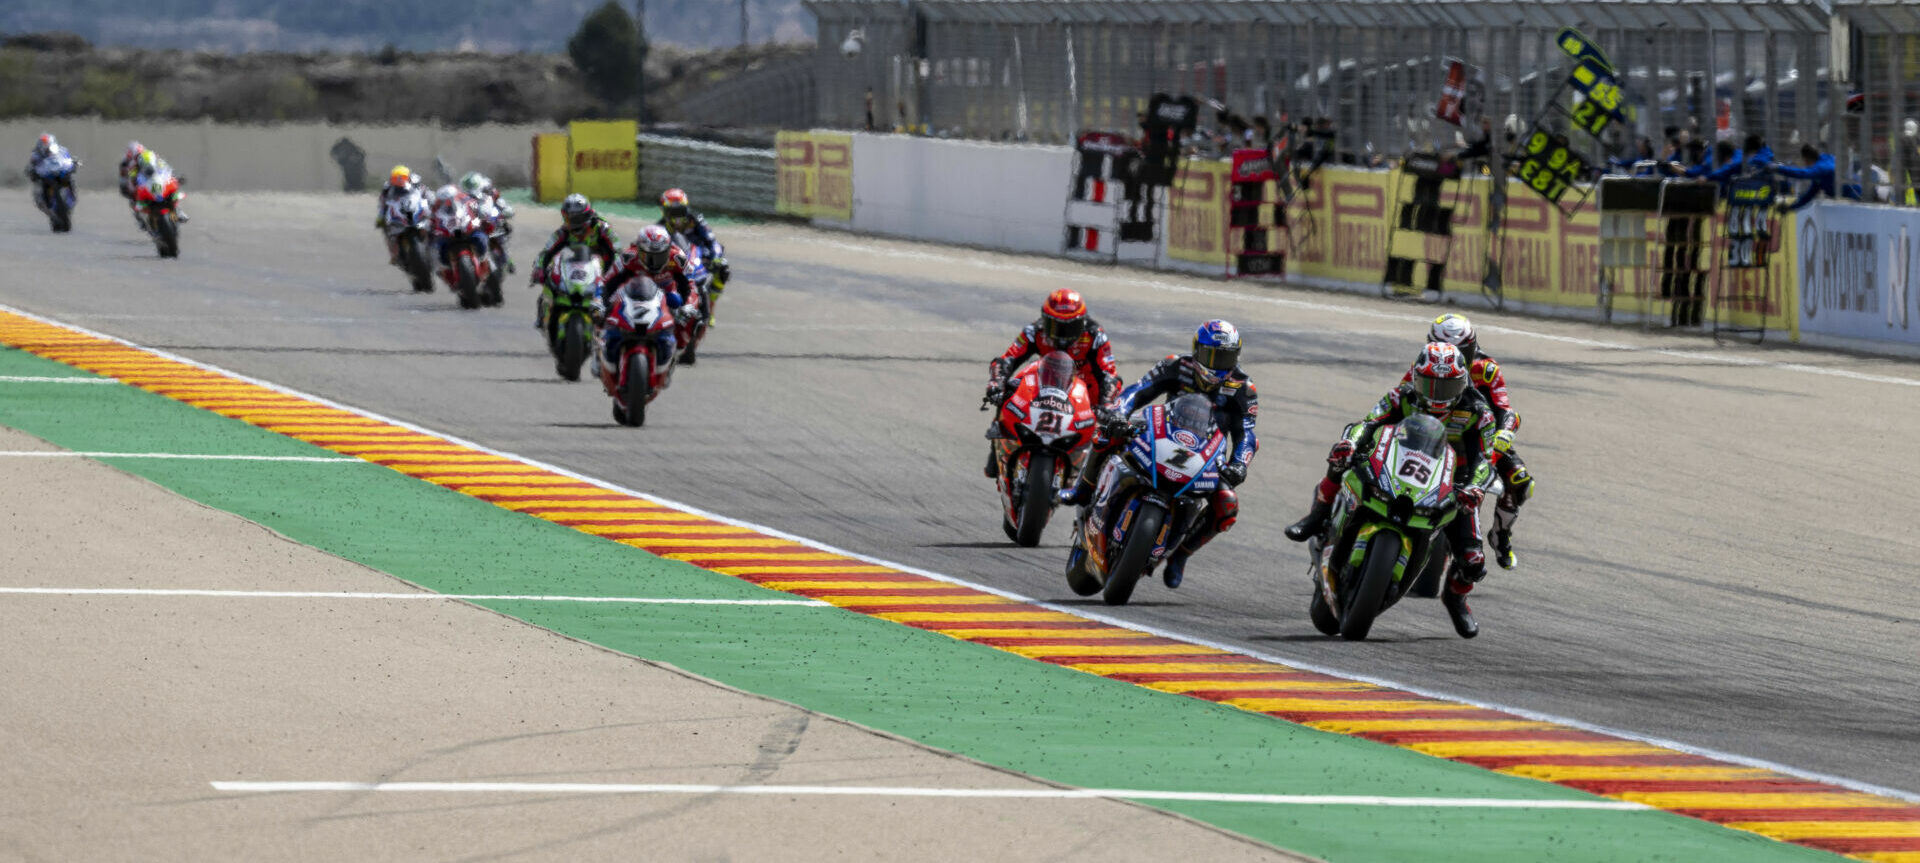 Action from a WorldSBK race at MotorLand Aragon earlier in 2022. Photo courtesy Kawasaki.